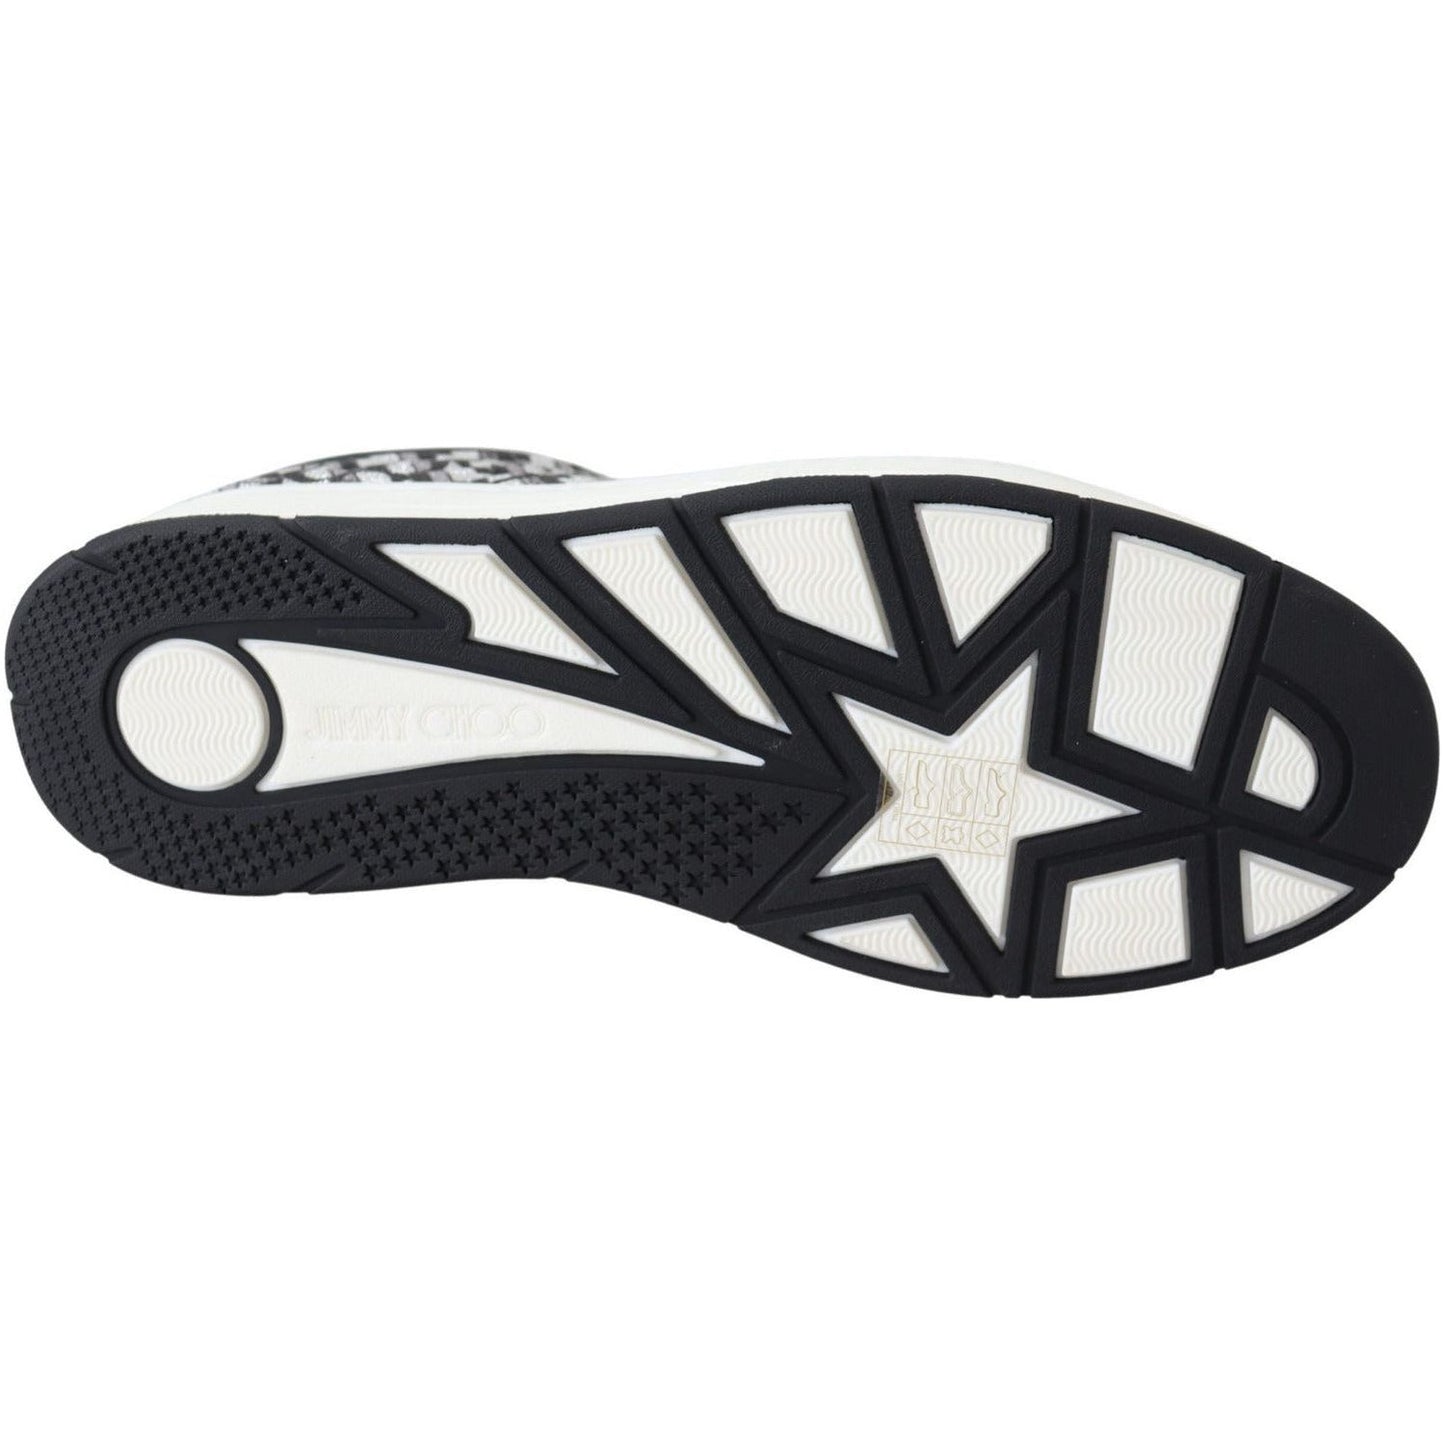 Jimmy ChooGlittering Slip-On Sneakers - Silver and BlackMcRichard Designer Brands£519.00